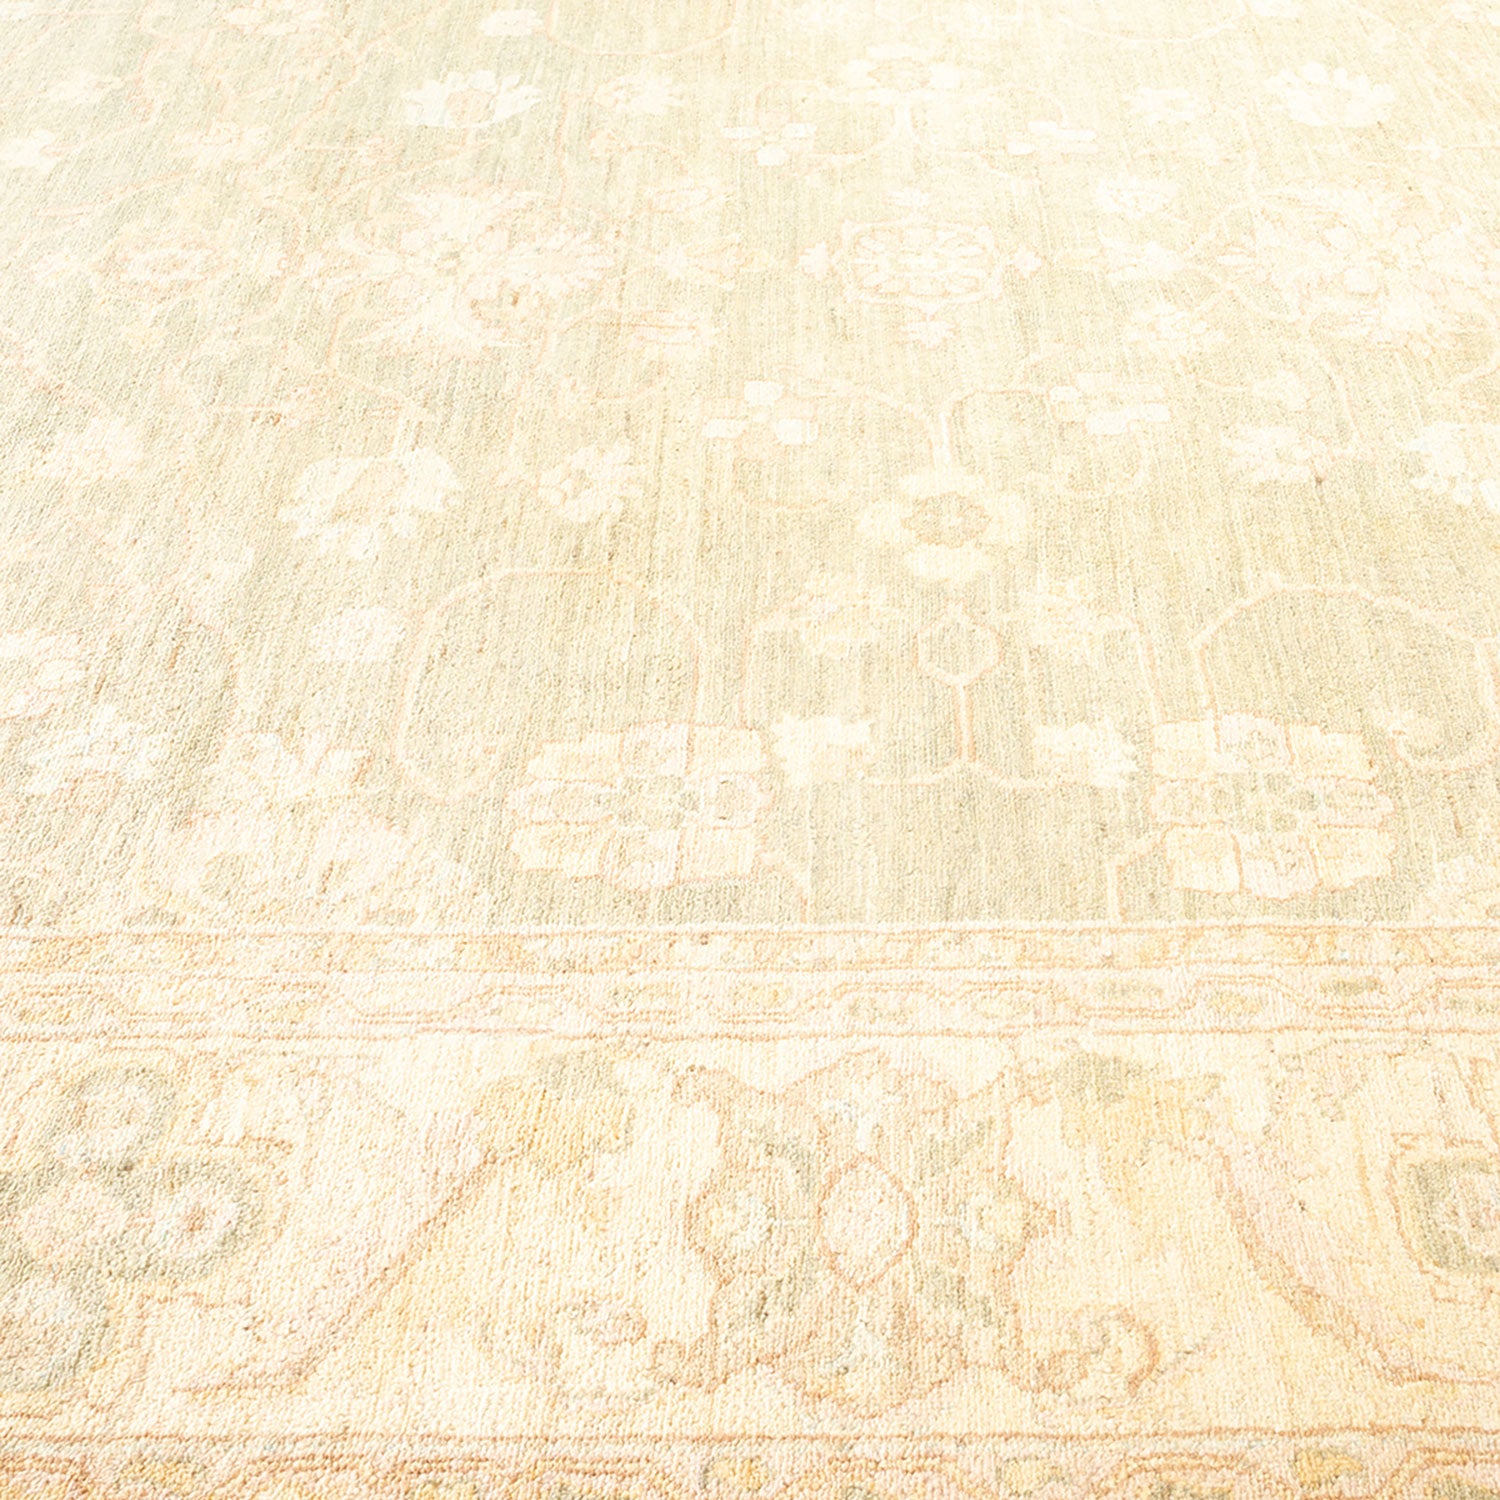 Delicate, ornate carpet in pale color with subtle floral patterns.